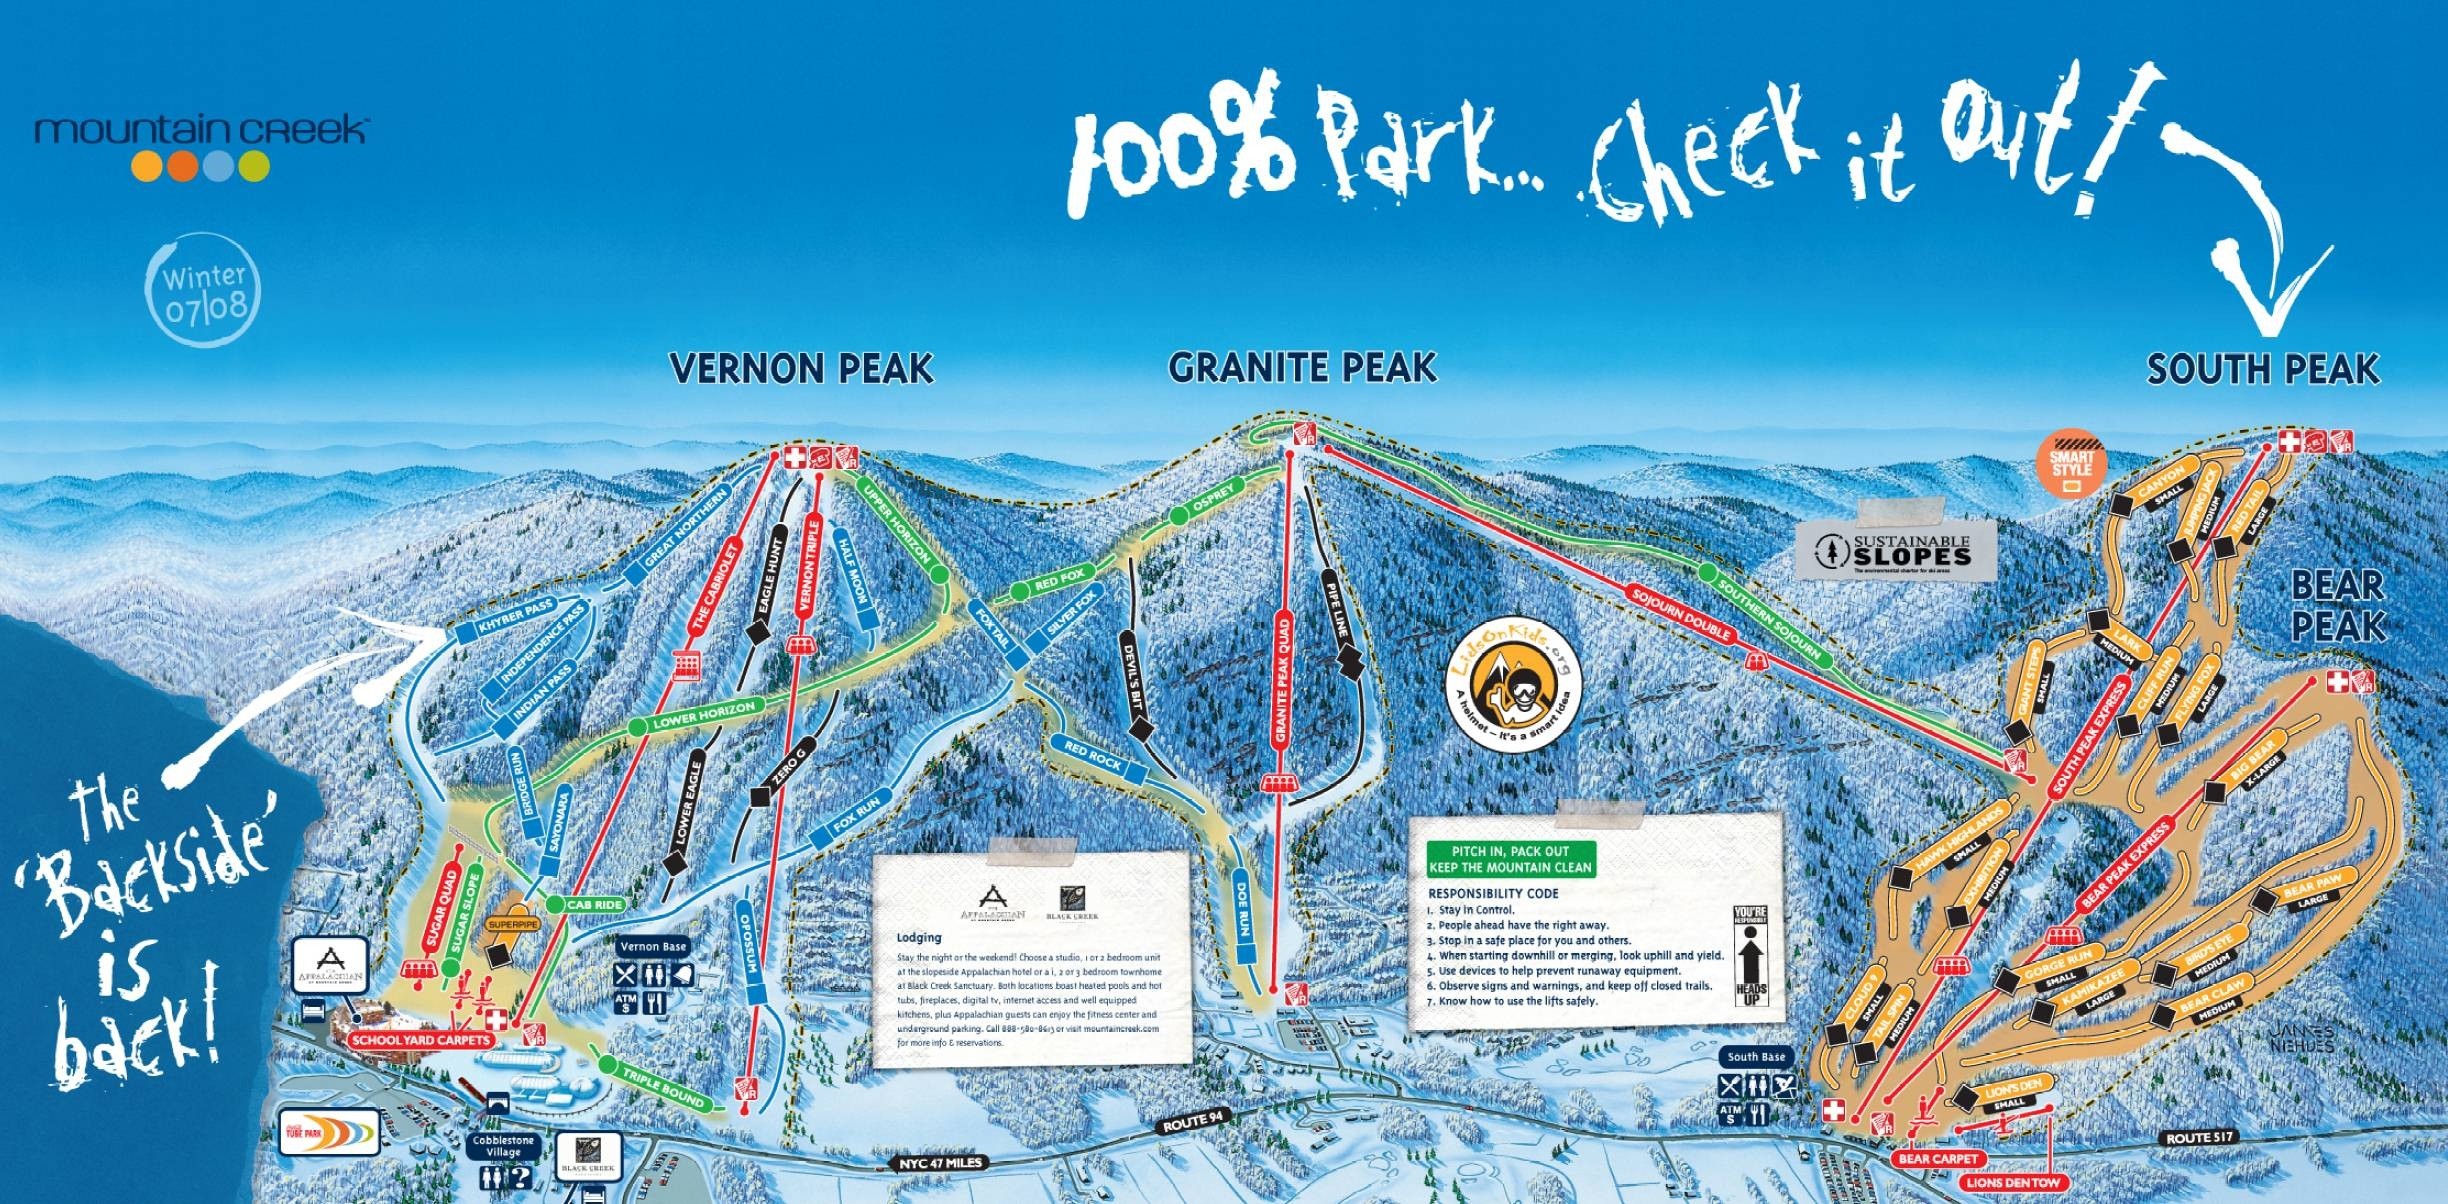 Mountain Creek NJ • Ski Holiday • Reviews • Skiing